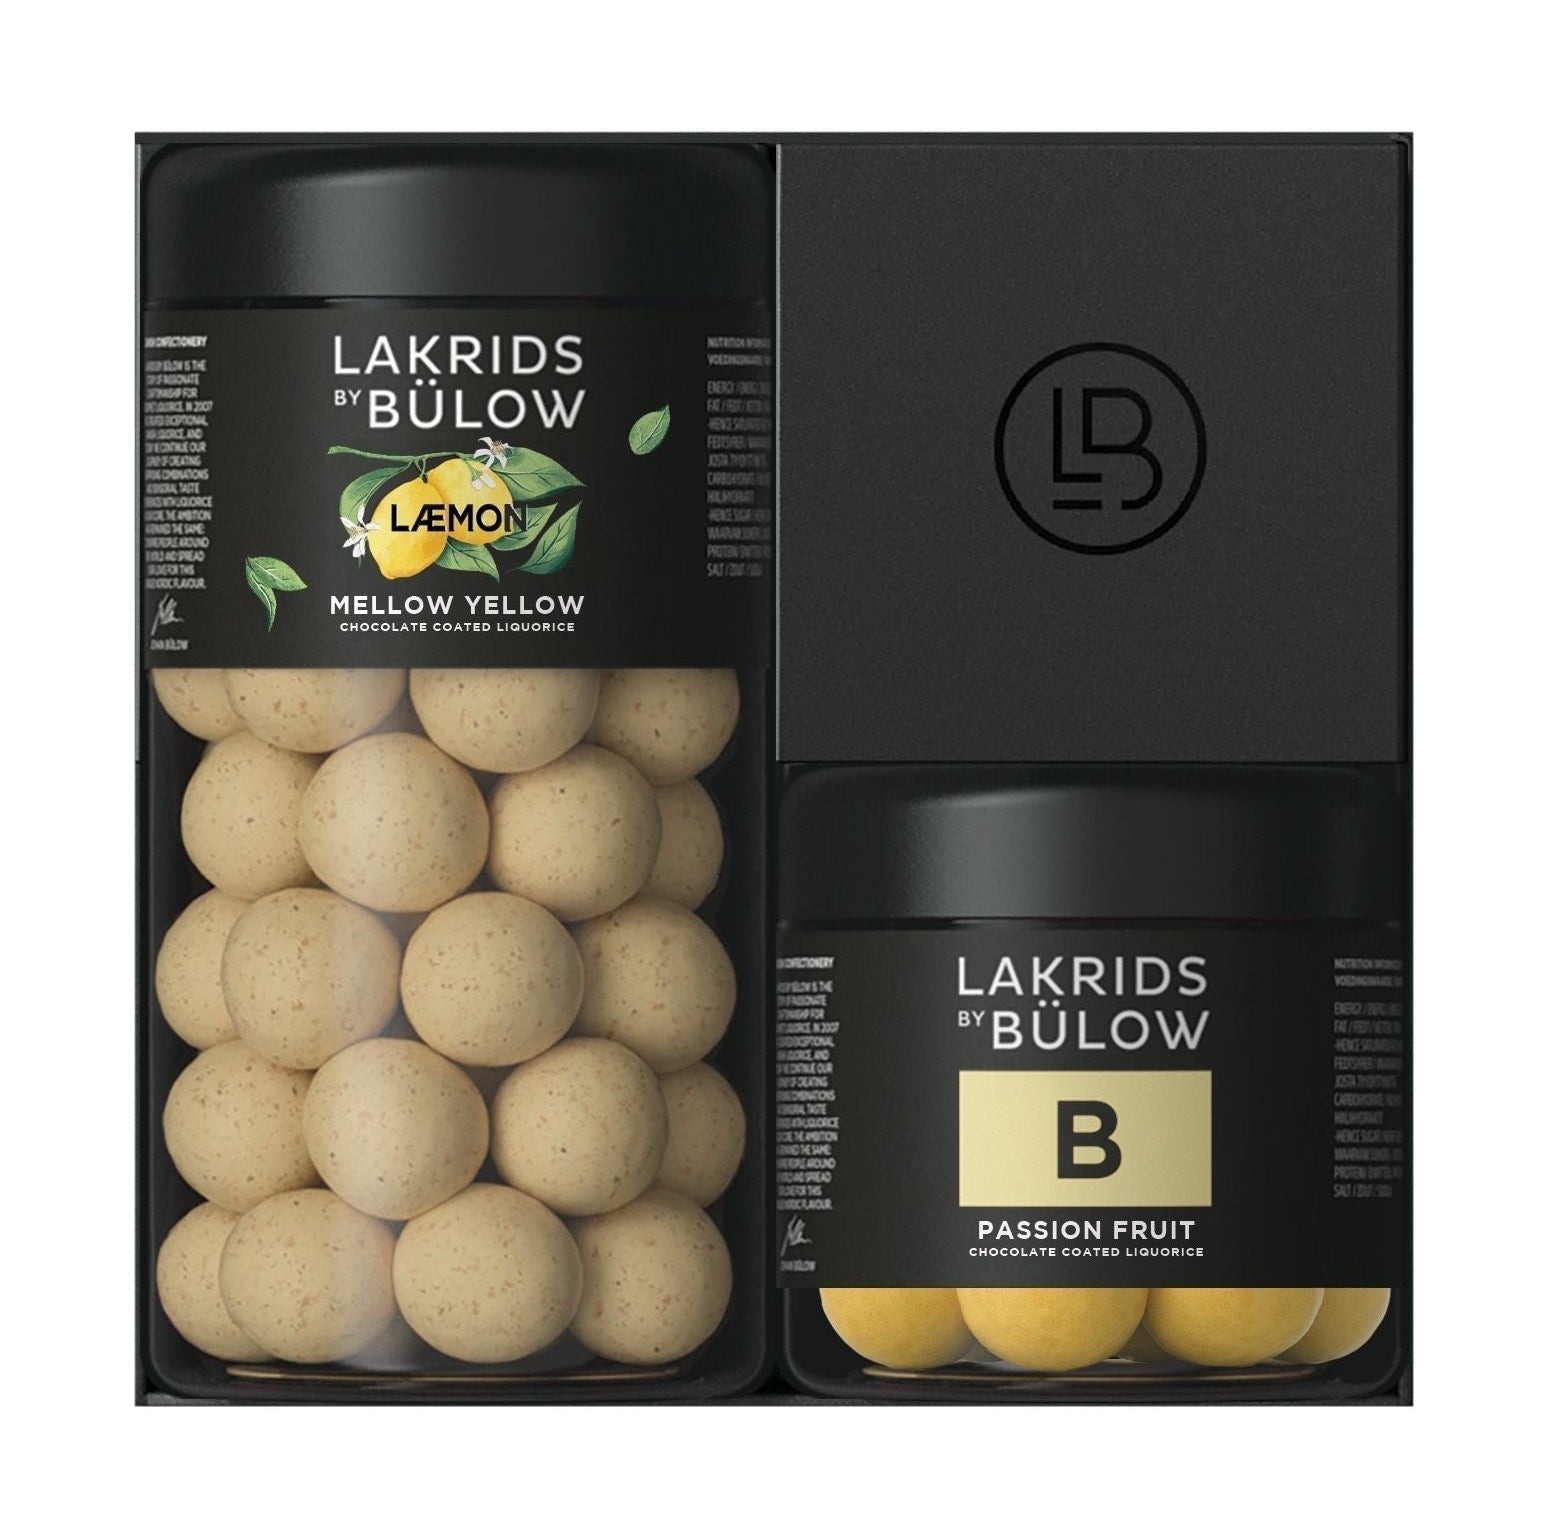 Lakrids by Bülow Citron svart låda, 420g